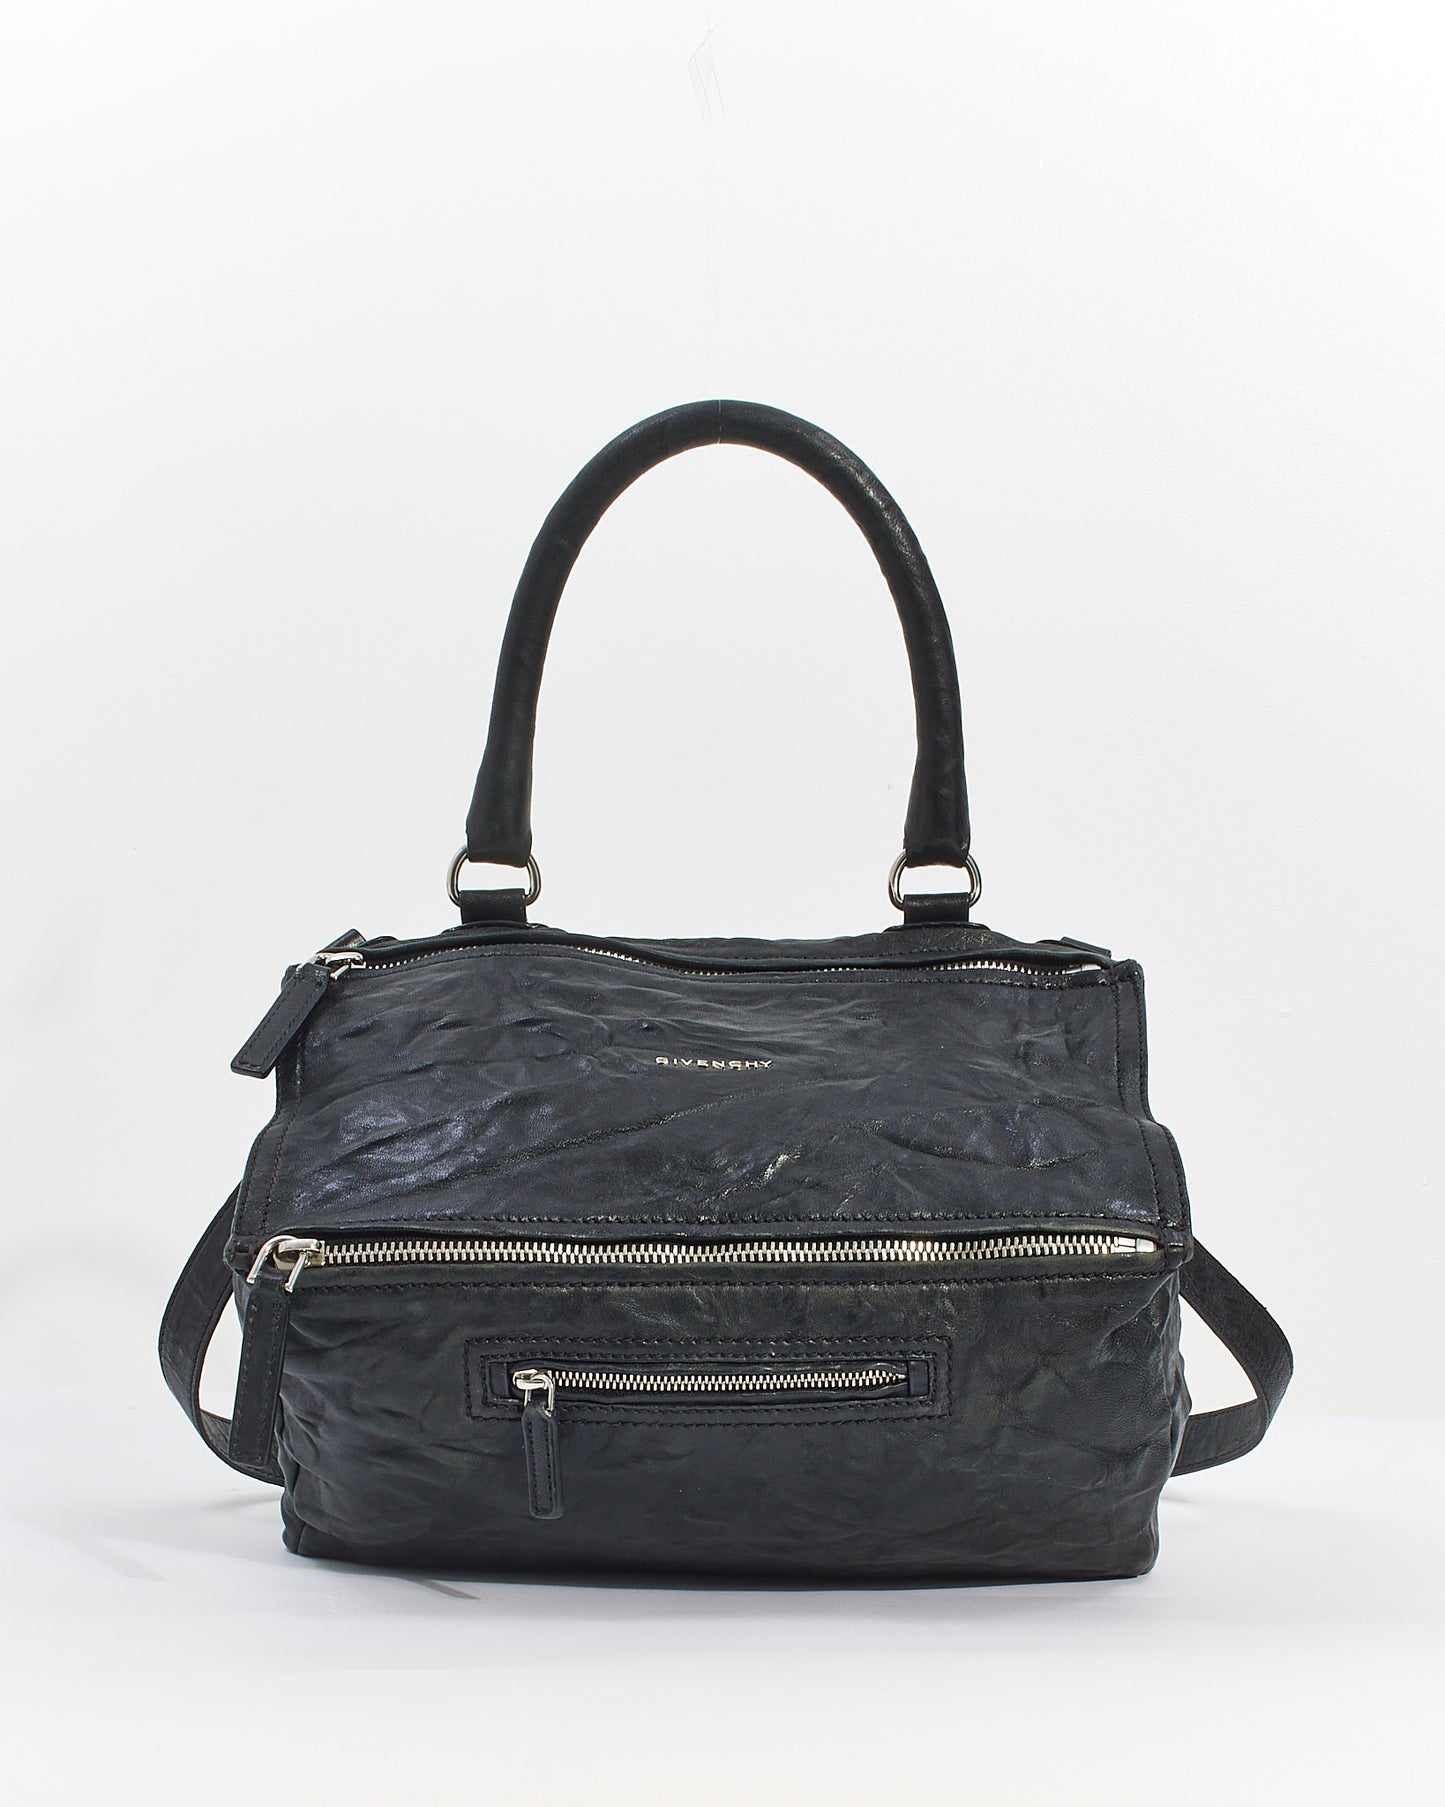 Givenchy Black Distressed Leather Medium Pandora Bag